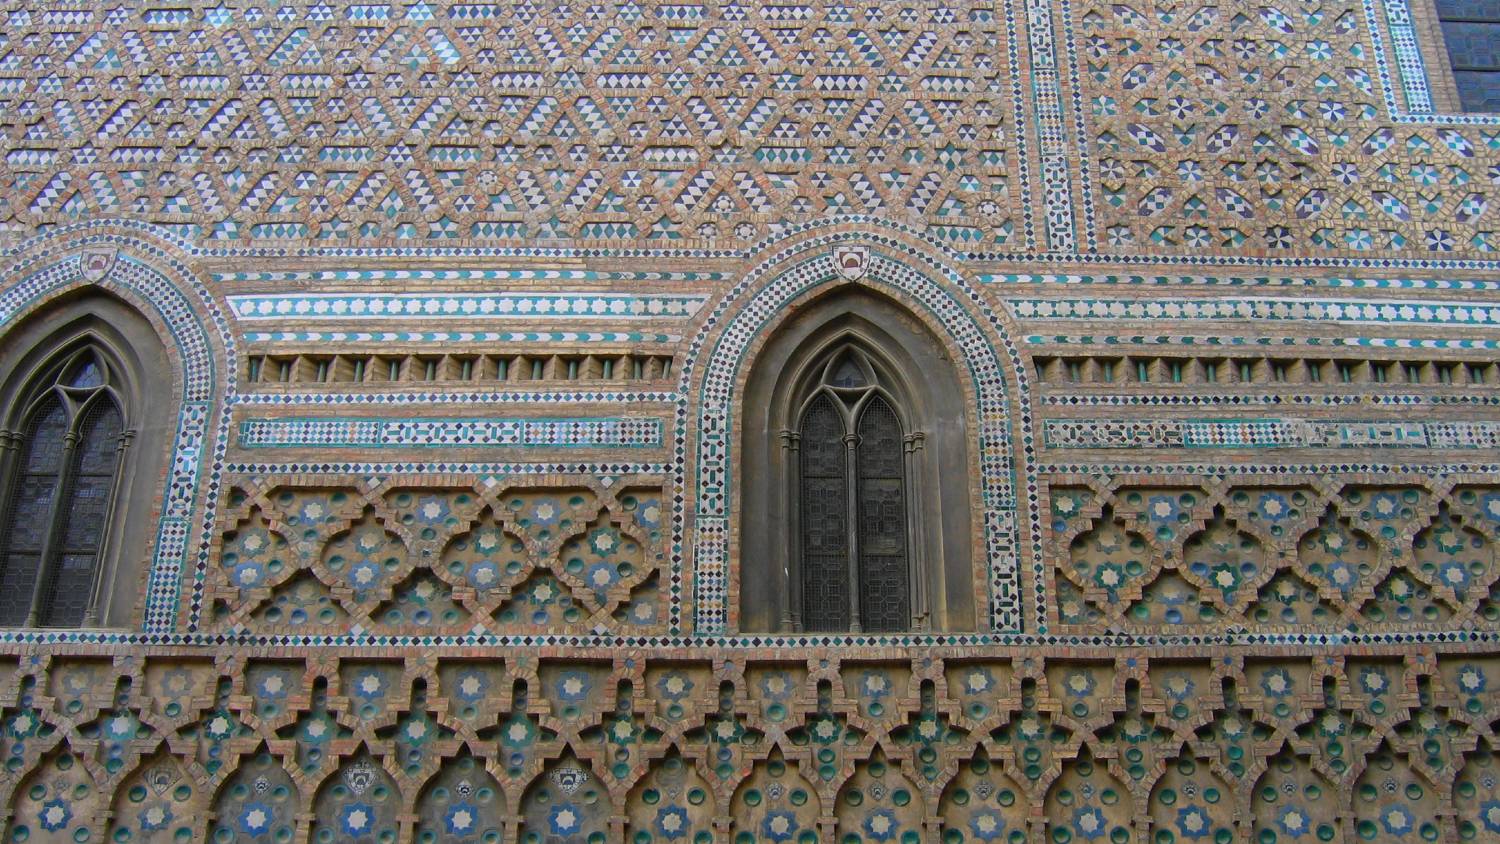 Mudejar tilework seen here on a building facade in Aragon, Spain (Wikipedia)